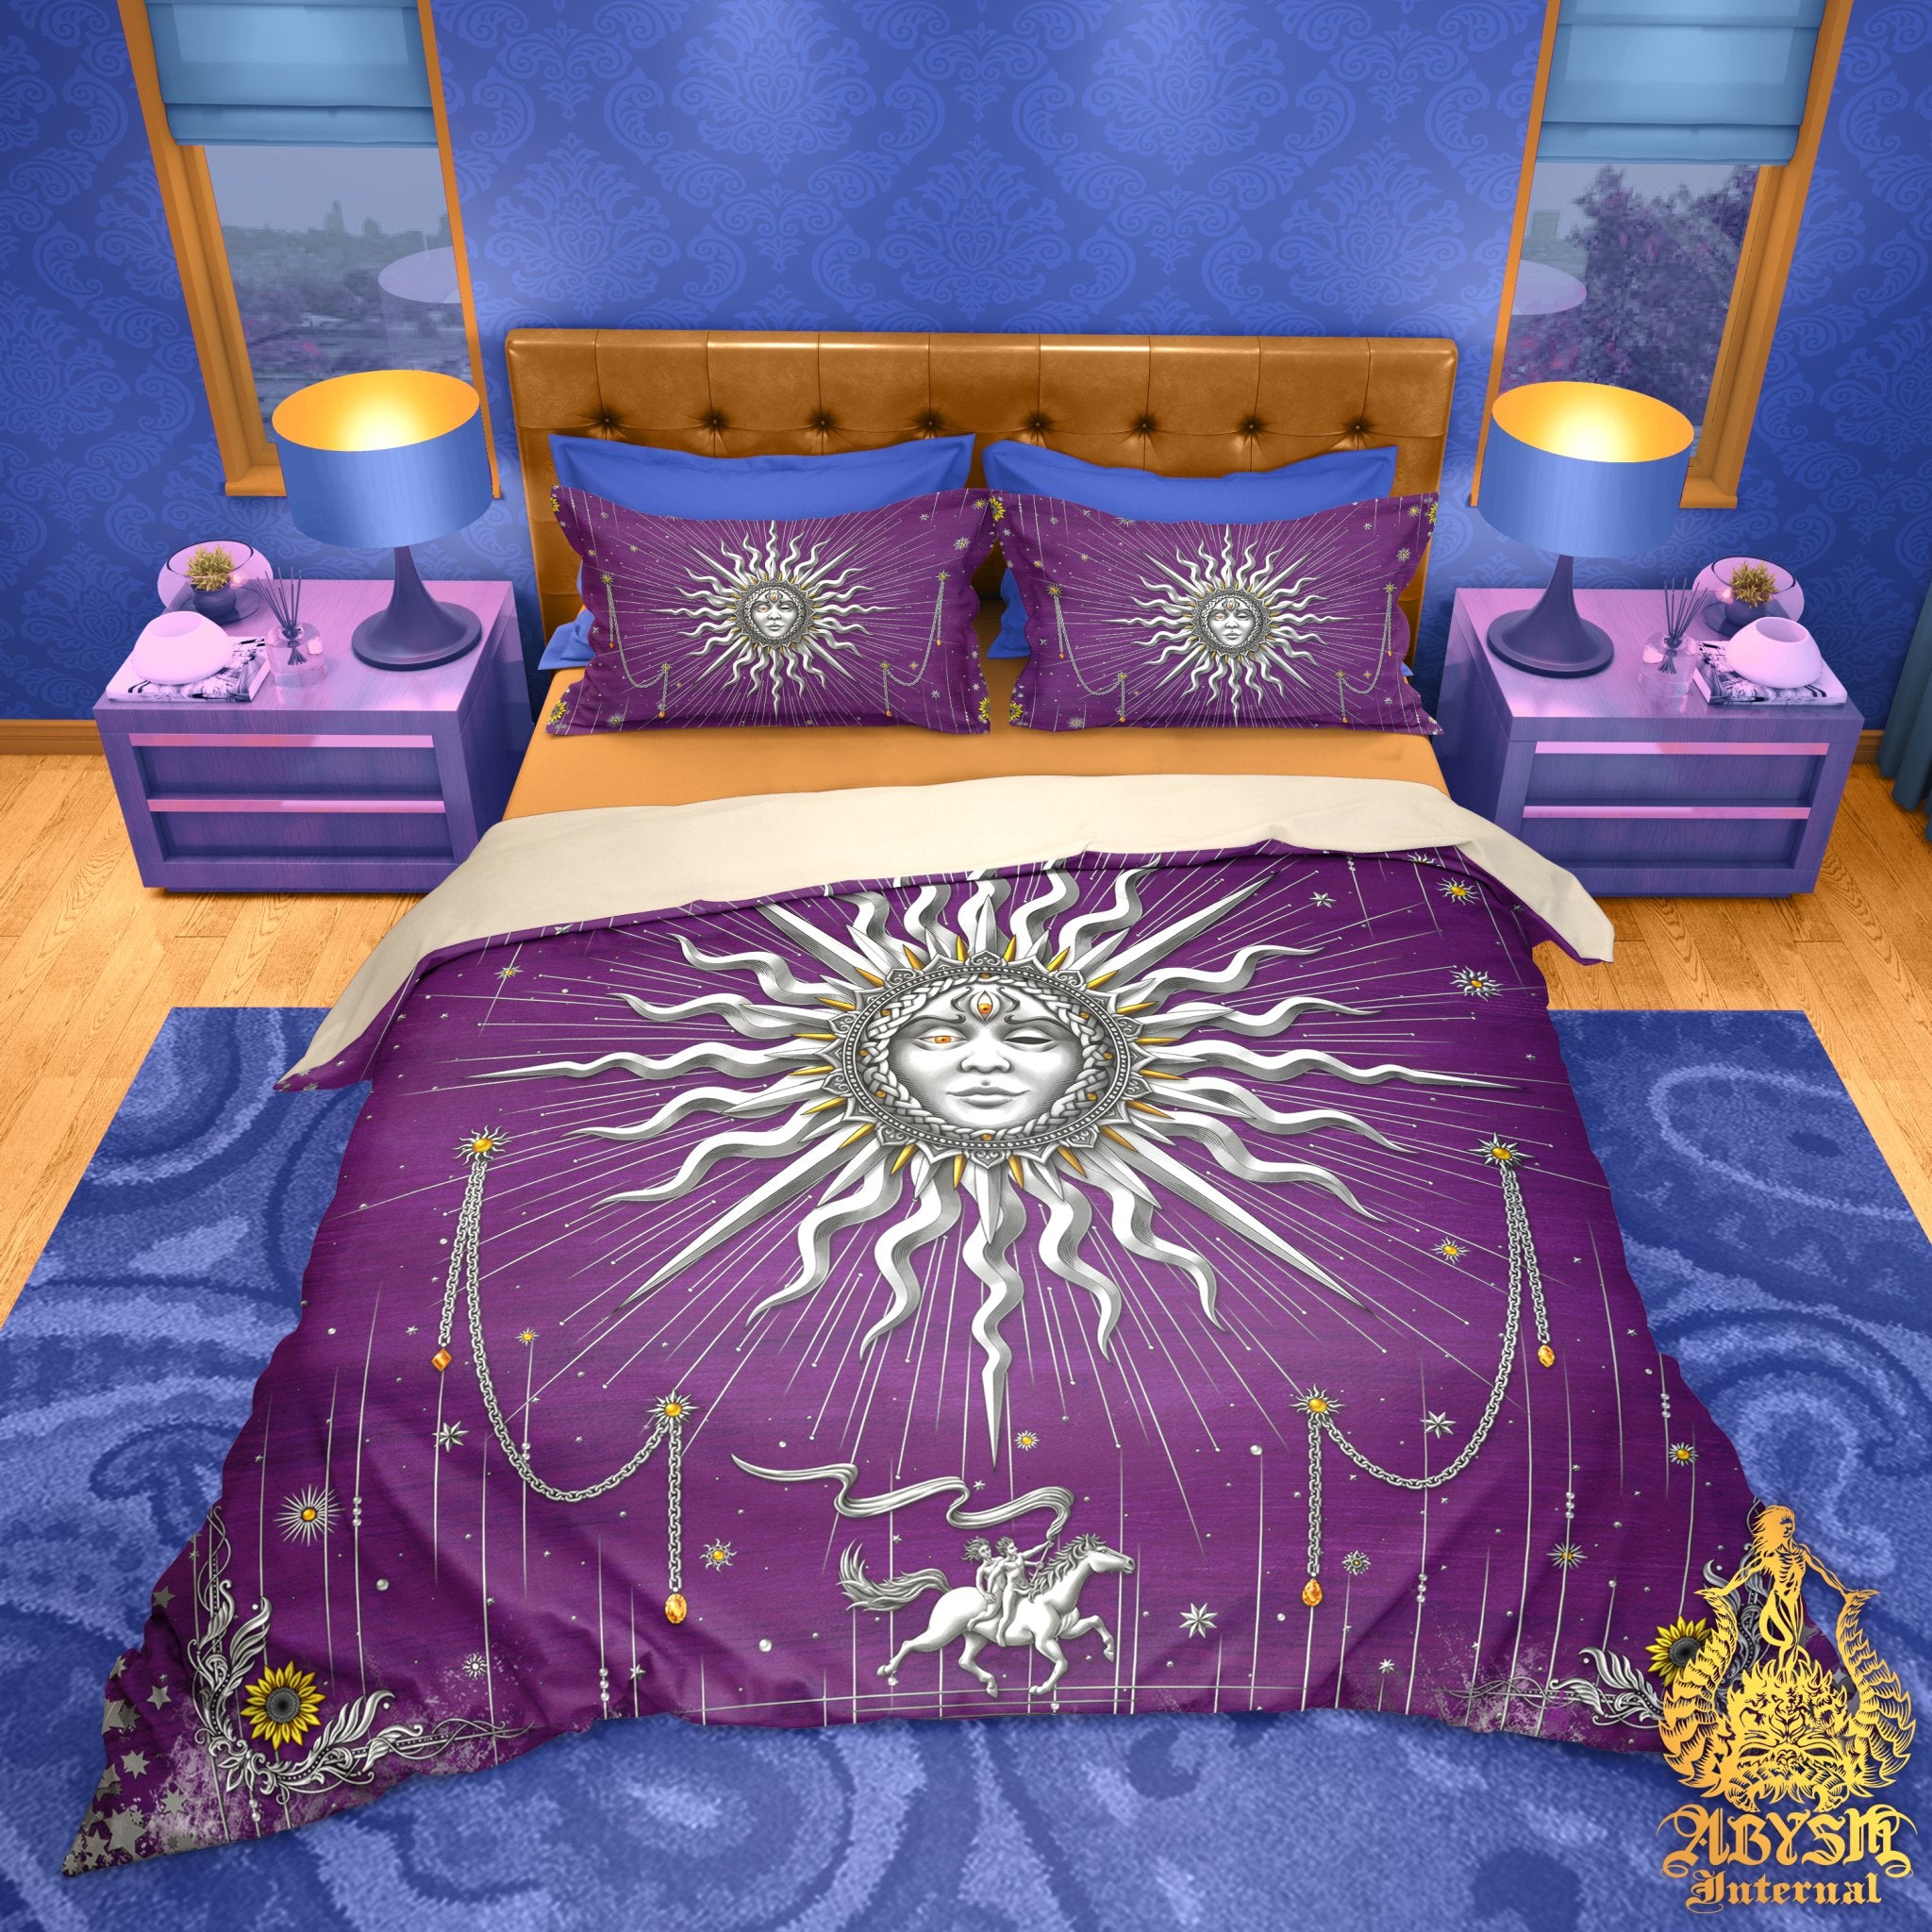 Silver Sun Duvet Cover, Bed Covering, Esoteric Comforter, Indie Bedroom Decor King, Queen & Twin Bedding Set - Boho Tarot Arcana Art, 7 Colors - Abysm Internal